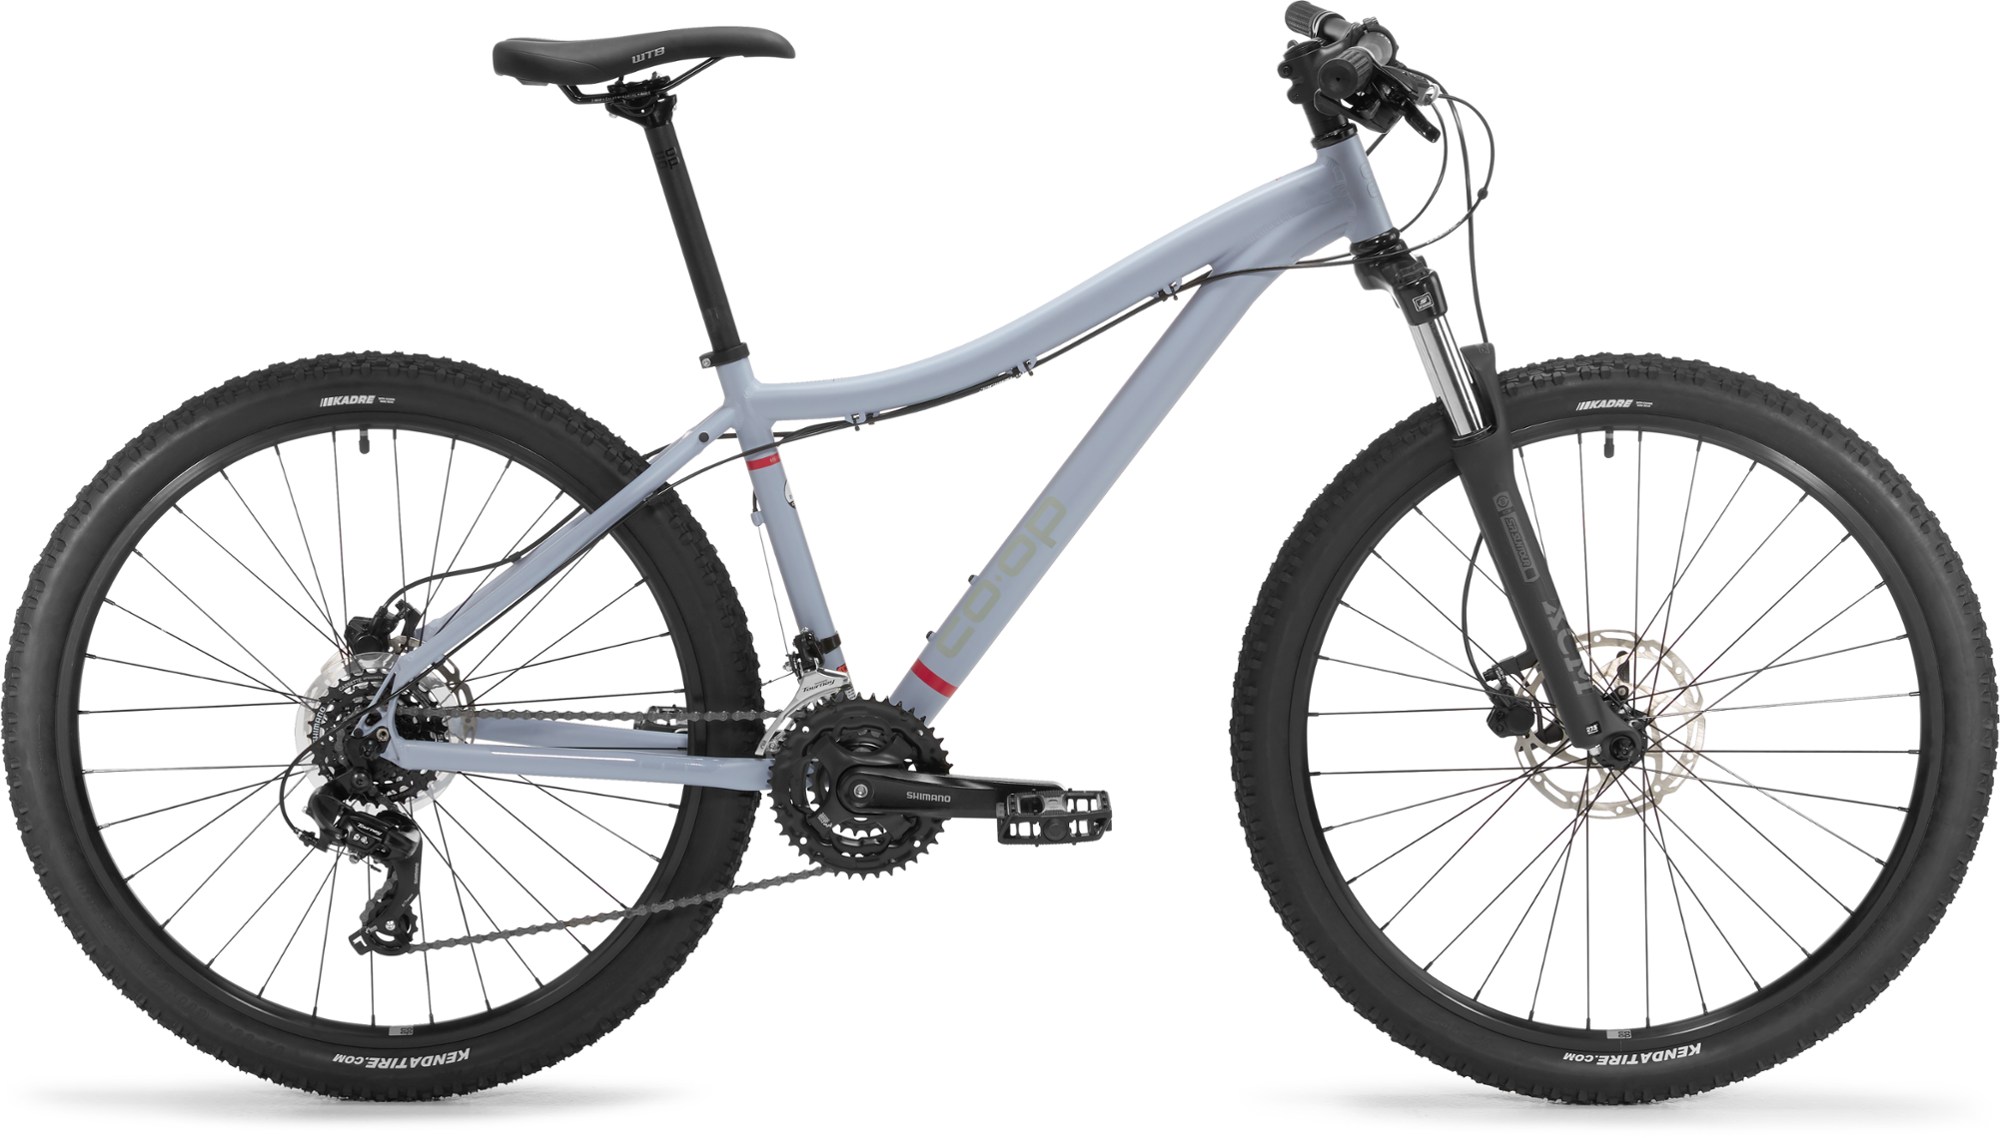 REI Co-op Members: Co-op Cycles DRT 1.1 Mountain Bike - $479 + Free Store Pickup